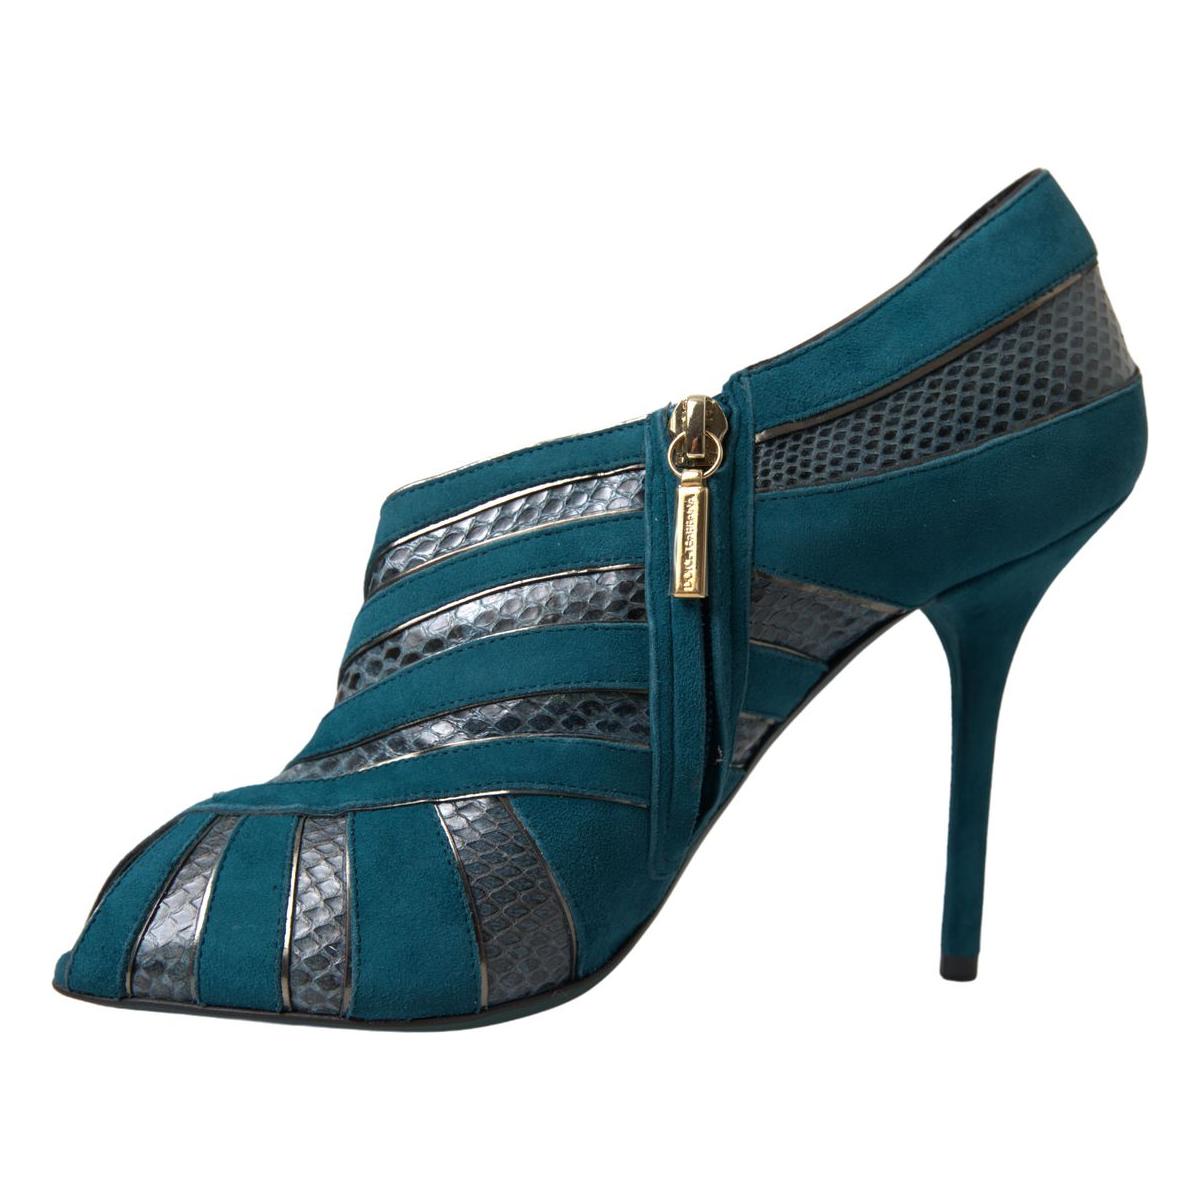 Dolce & Gabbana Chic Blue Peep Toe Stiletto Ankle Booties blue-teal-snakeskin-peep-toe-ankle-booties-shoes 465A8809-5c2614cf-e33.jpg